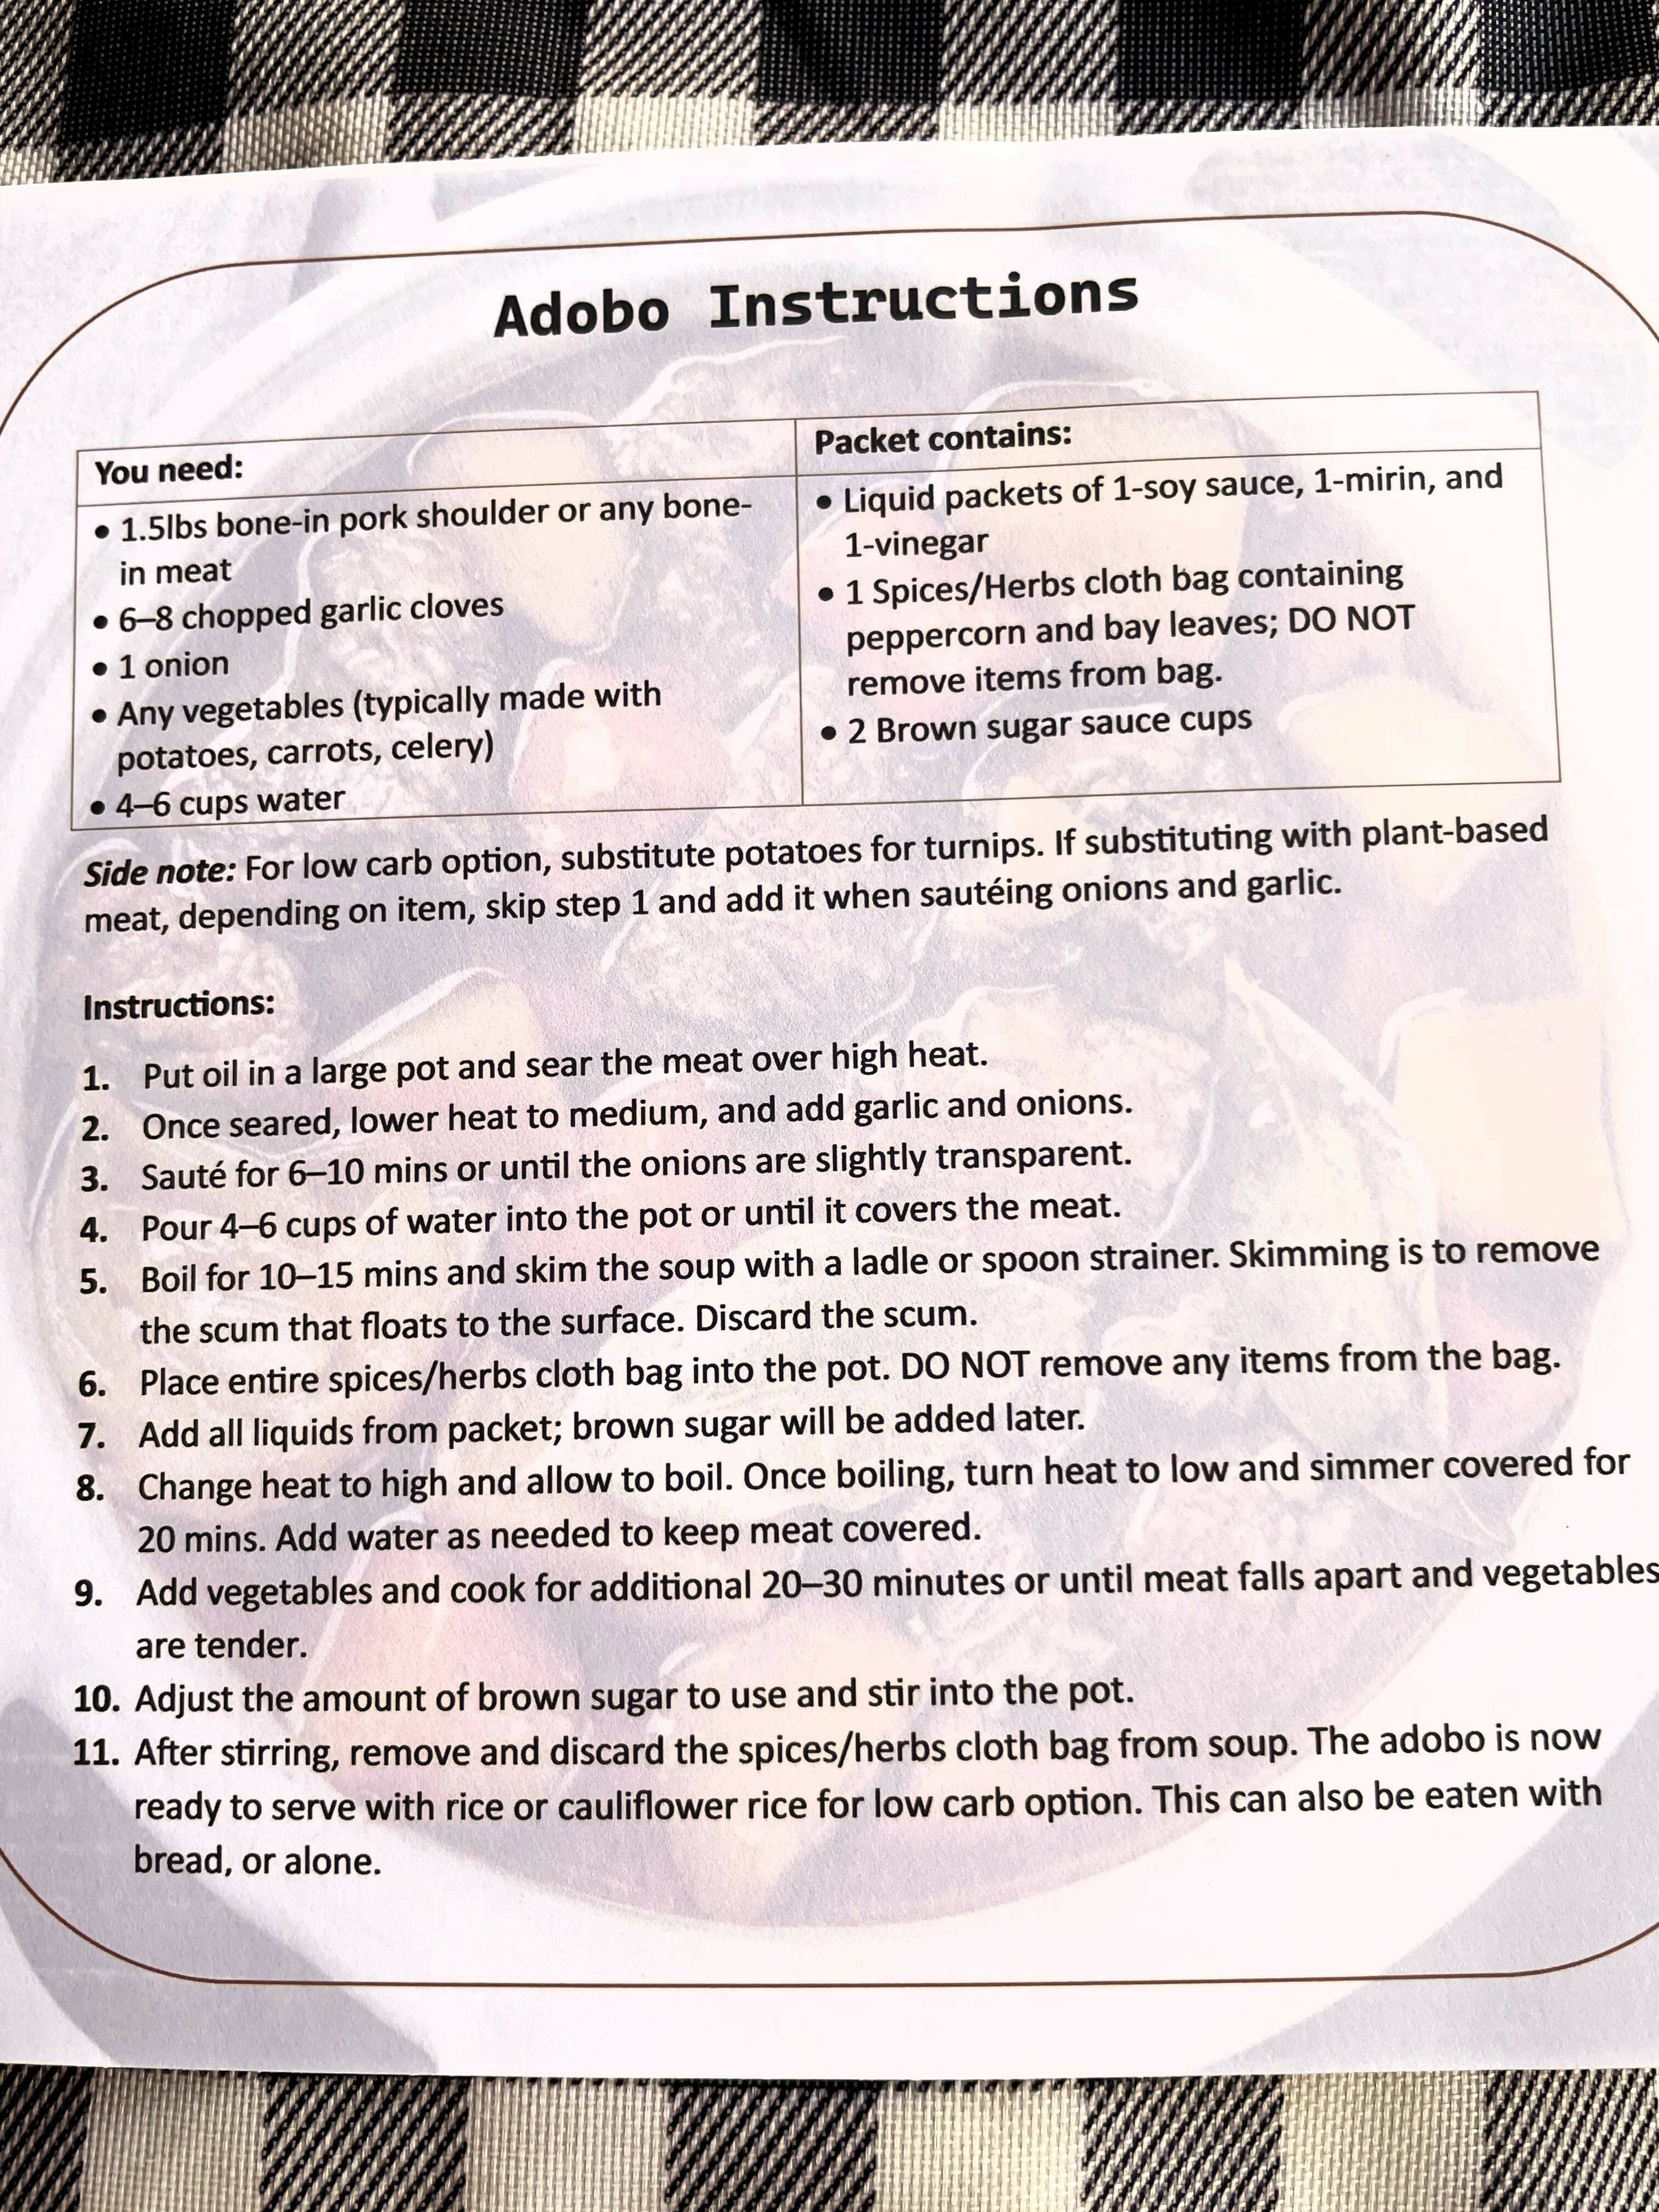 Auntie Kat's Adobo Seasoning Kit